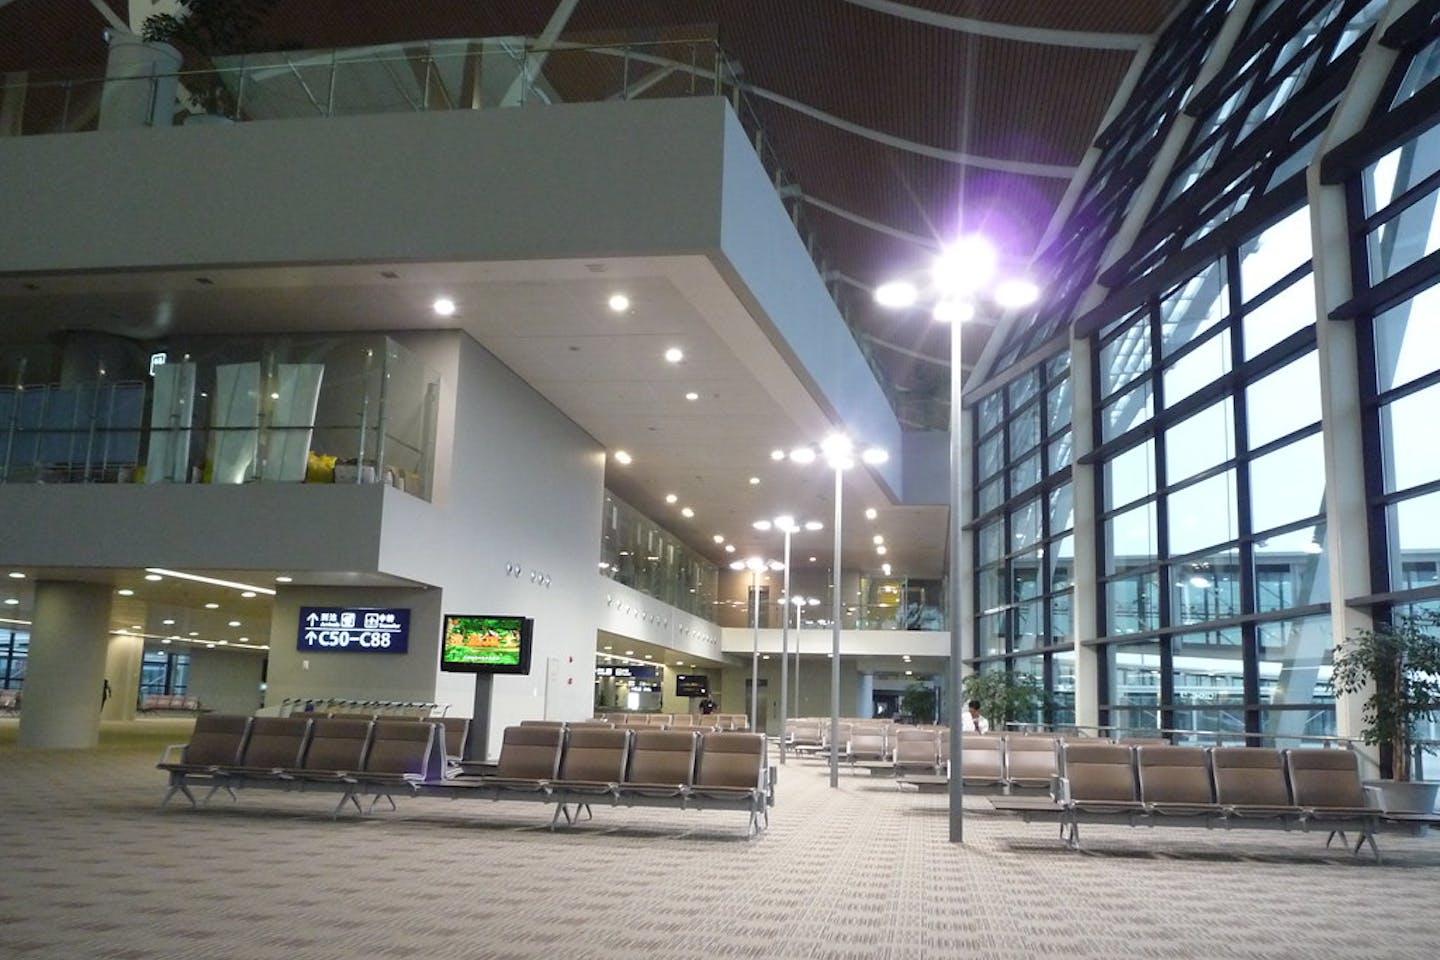 Pudong International Airport in Shanghai, China